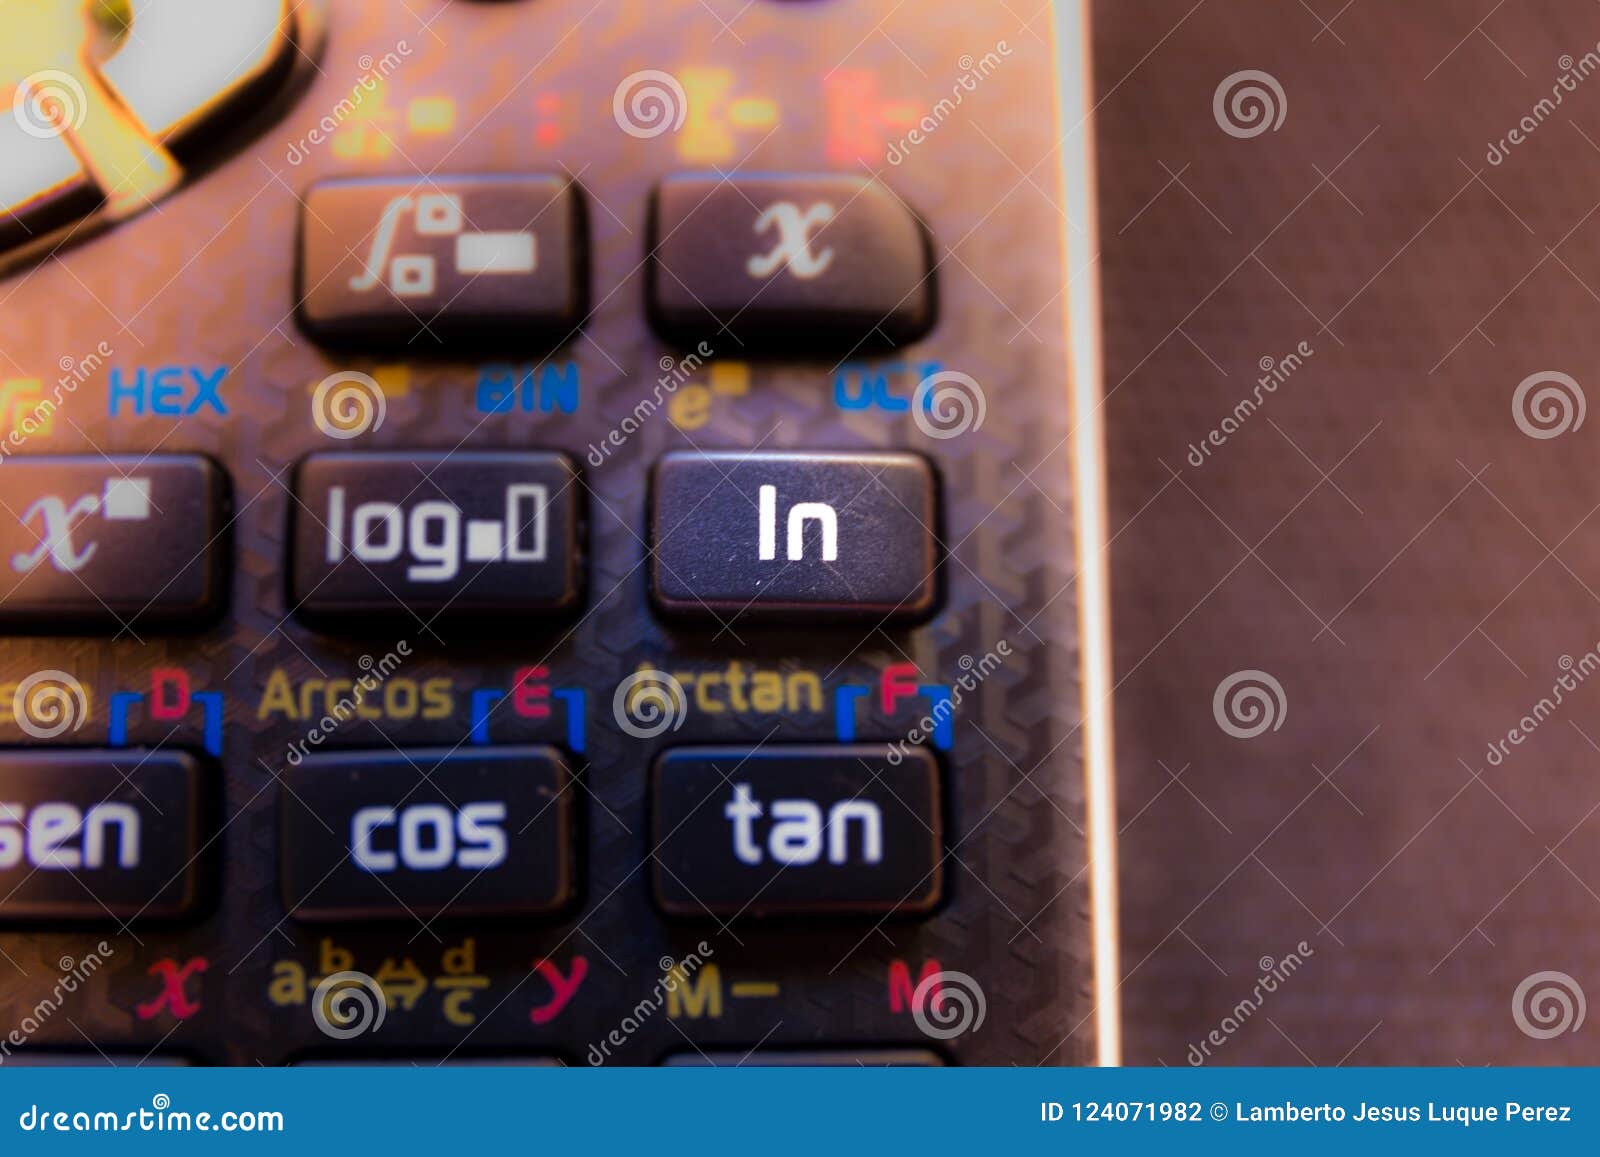 Ln Neperian Logarithm Key of a Scientific Calculator Keyboard Stock Photo -  Image of machine, logarithmic: 124071982